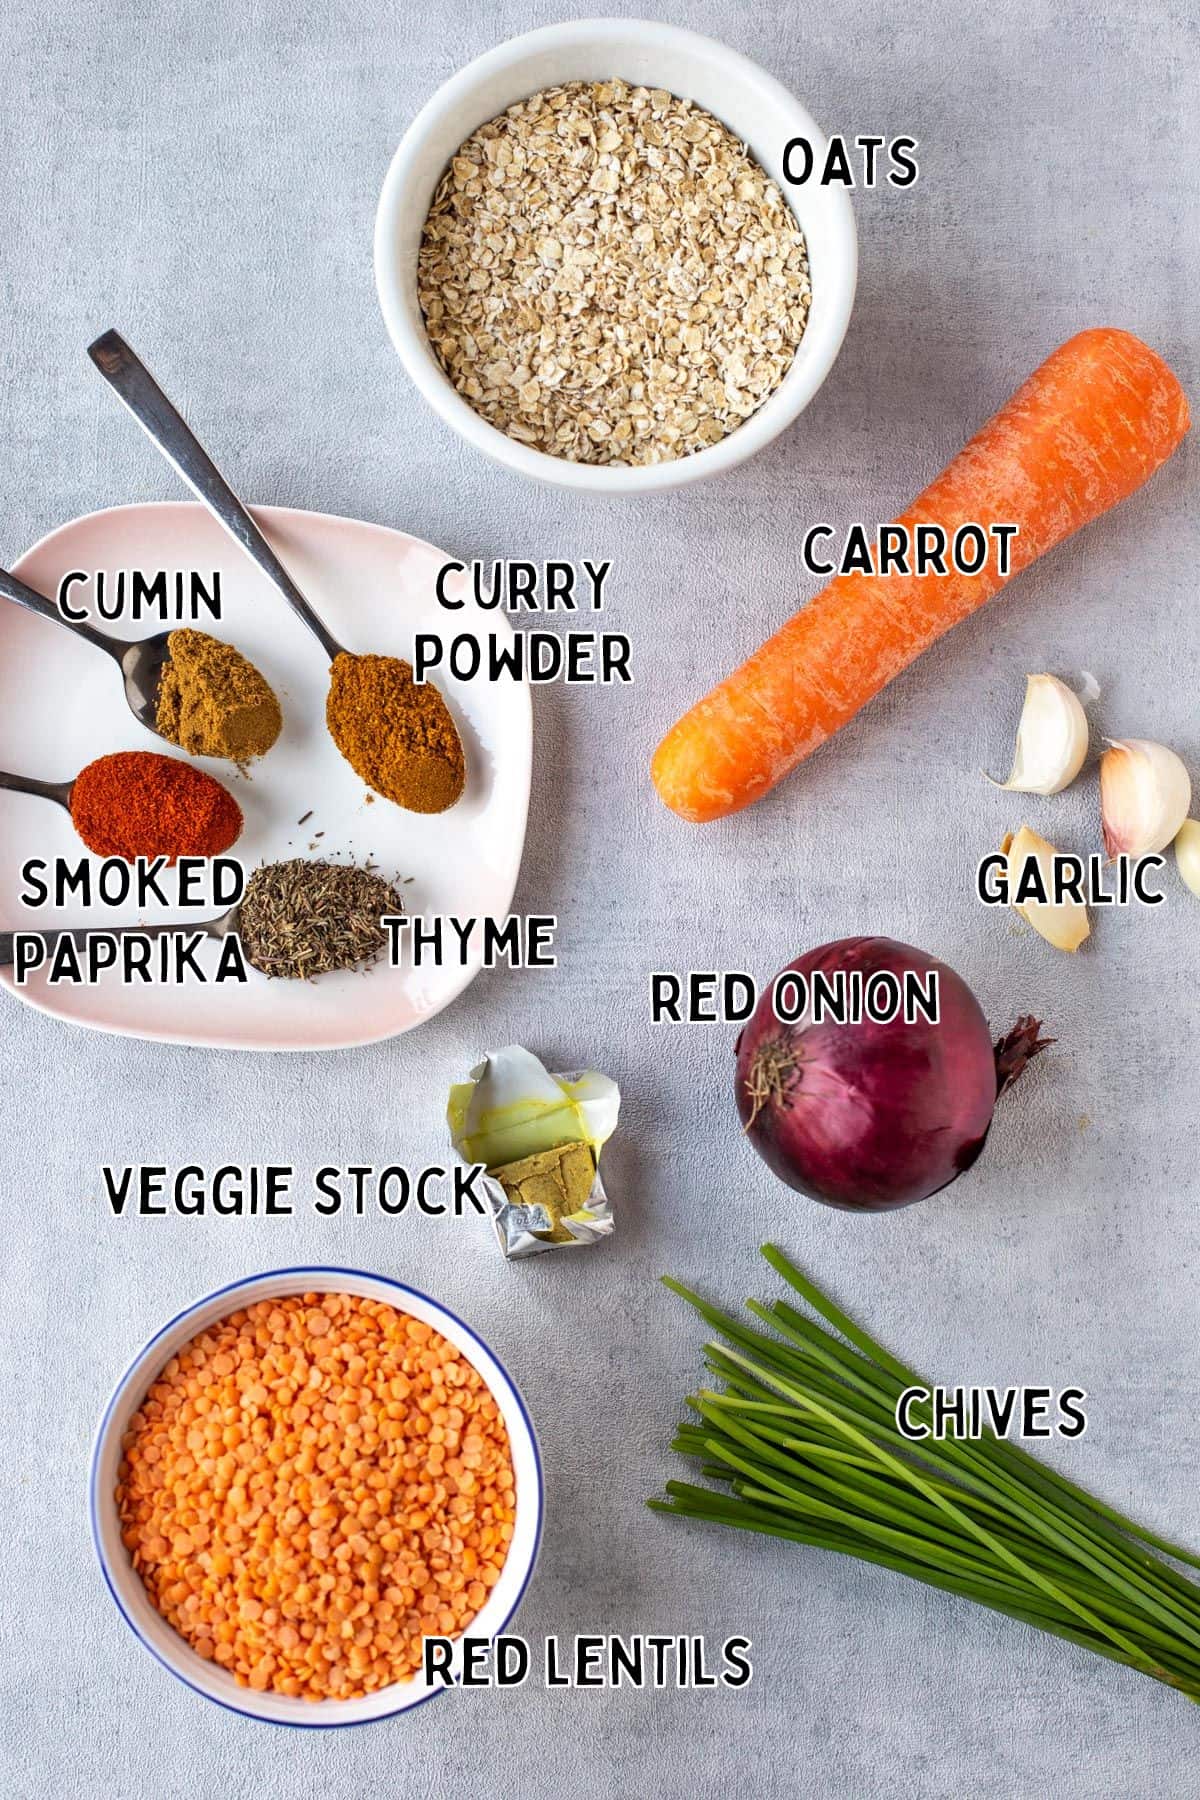 Ingredients for vegan lentil loaf with text overlay.